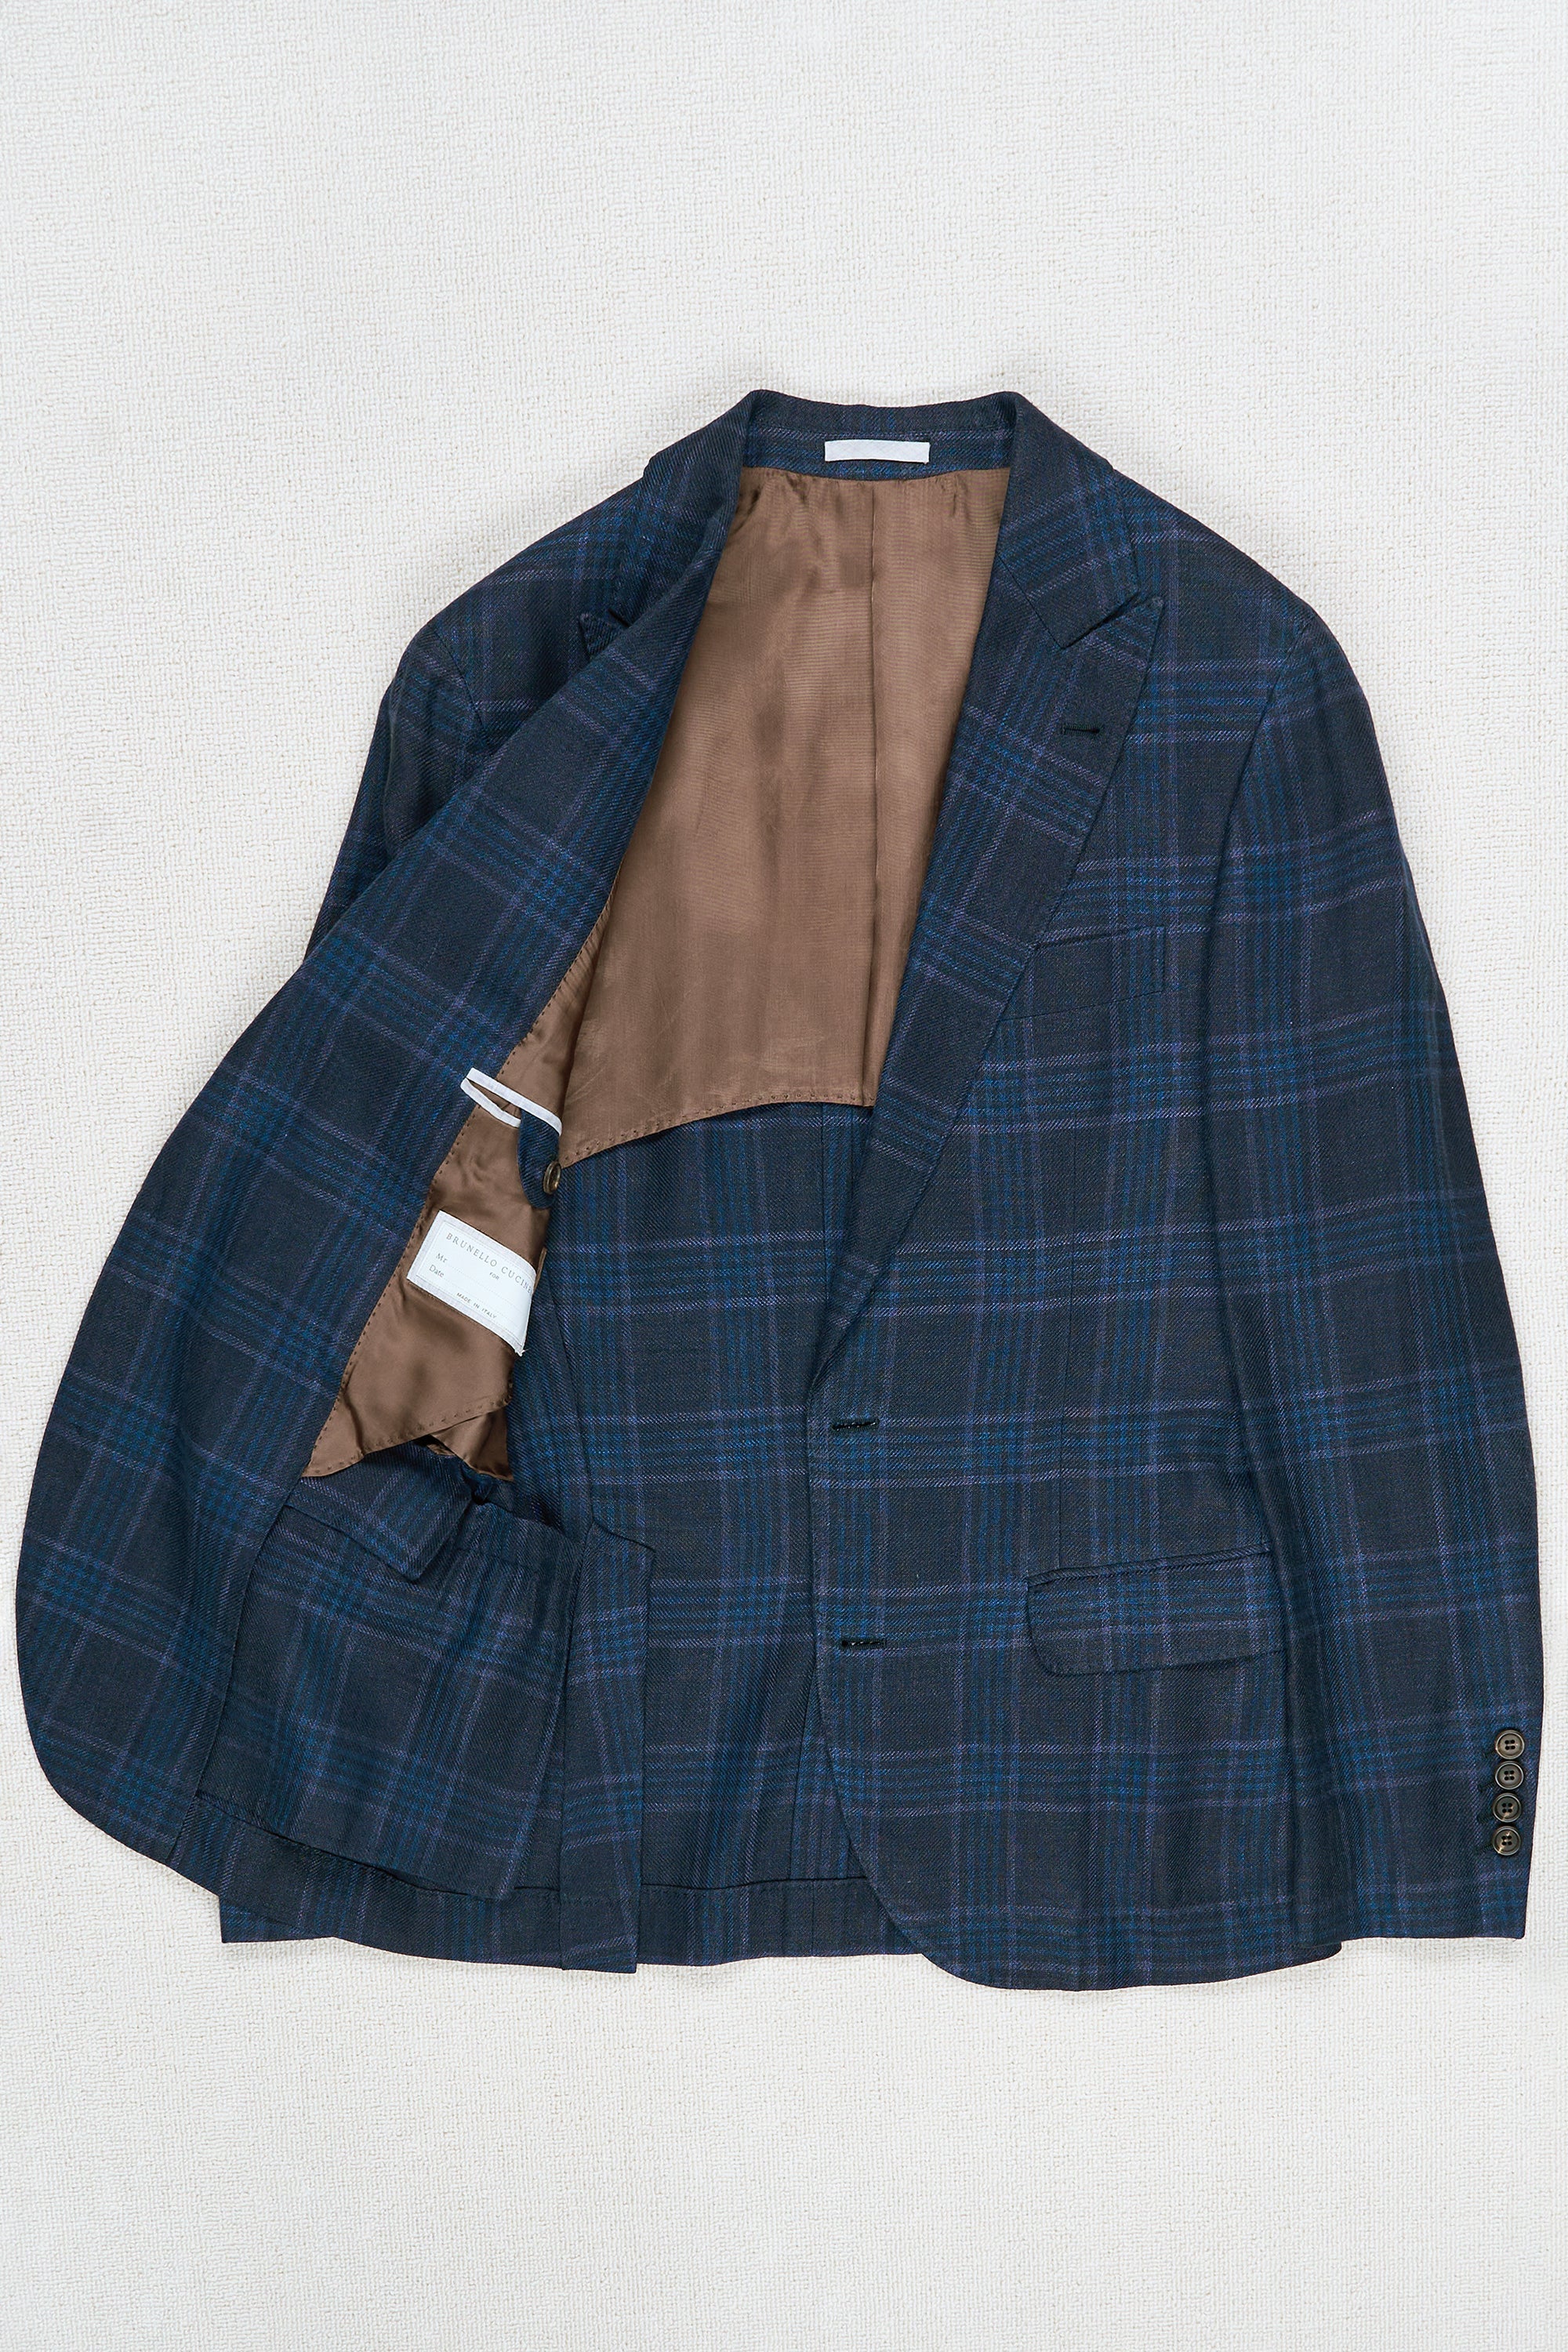 Brunello Cucinelli Navy with Blue/Purple Check Linen/Wool/Silk Sport Coat